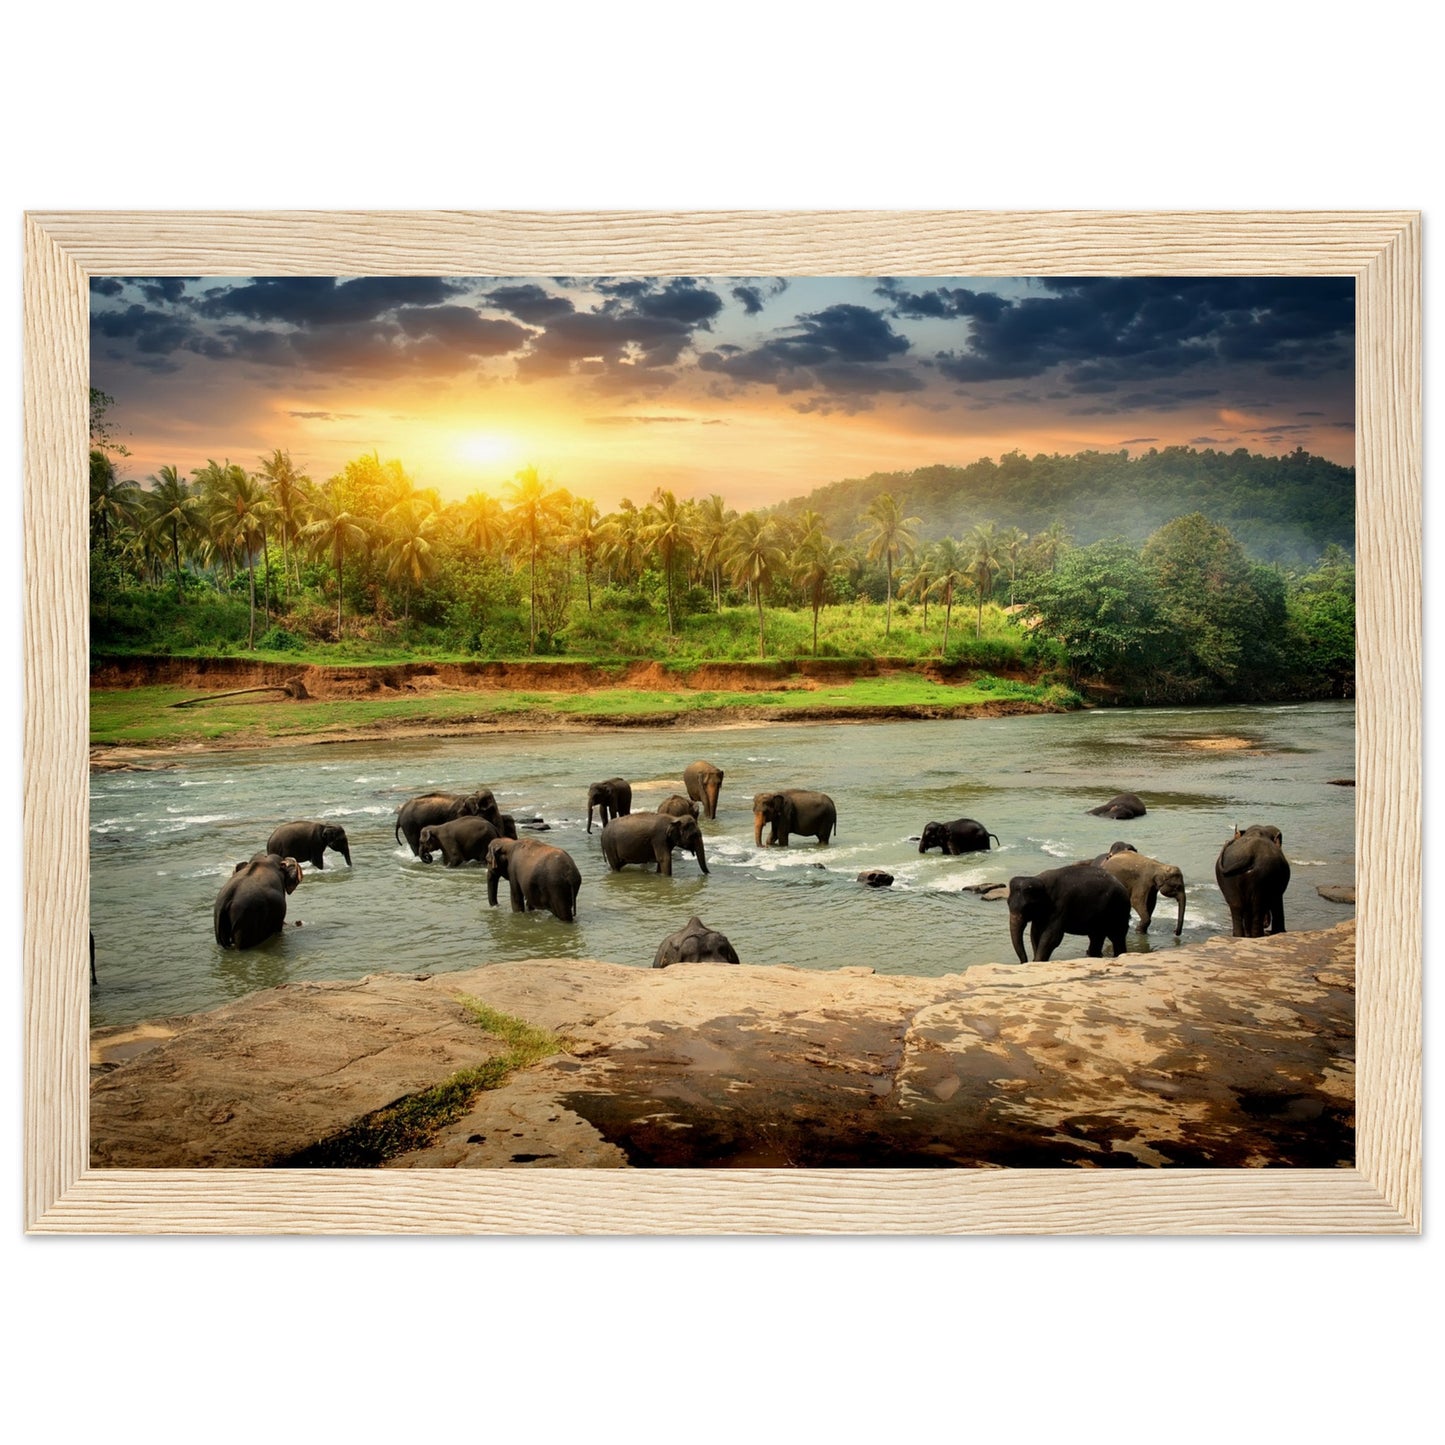 Elephants in Sri Lanka's Jungle